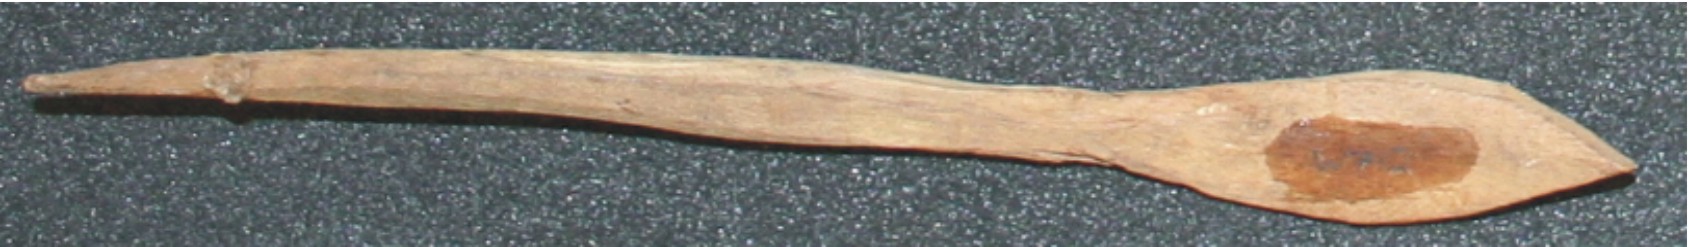 Image for: Model oar or rudder